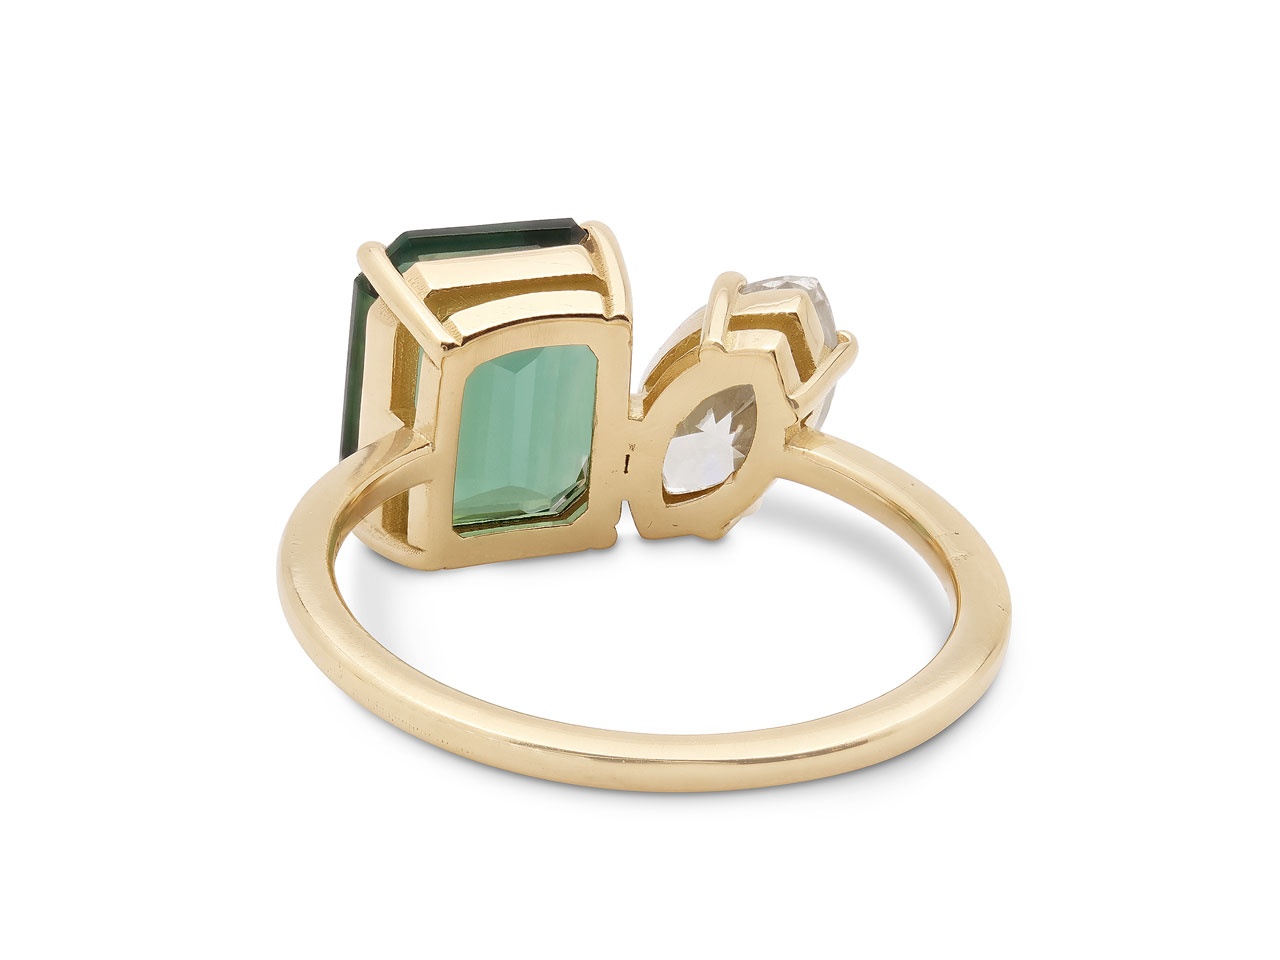 Beladora 'Bespoke' 'Toi et Moi' Green Tourmaline and Diamond Ring in 18K Gold